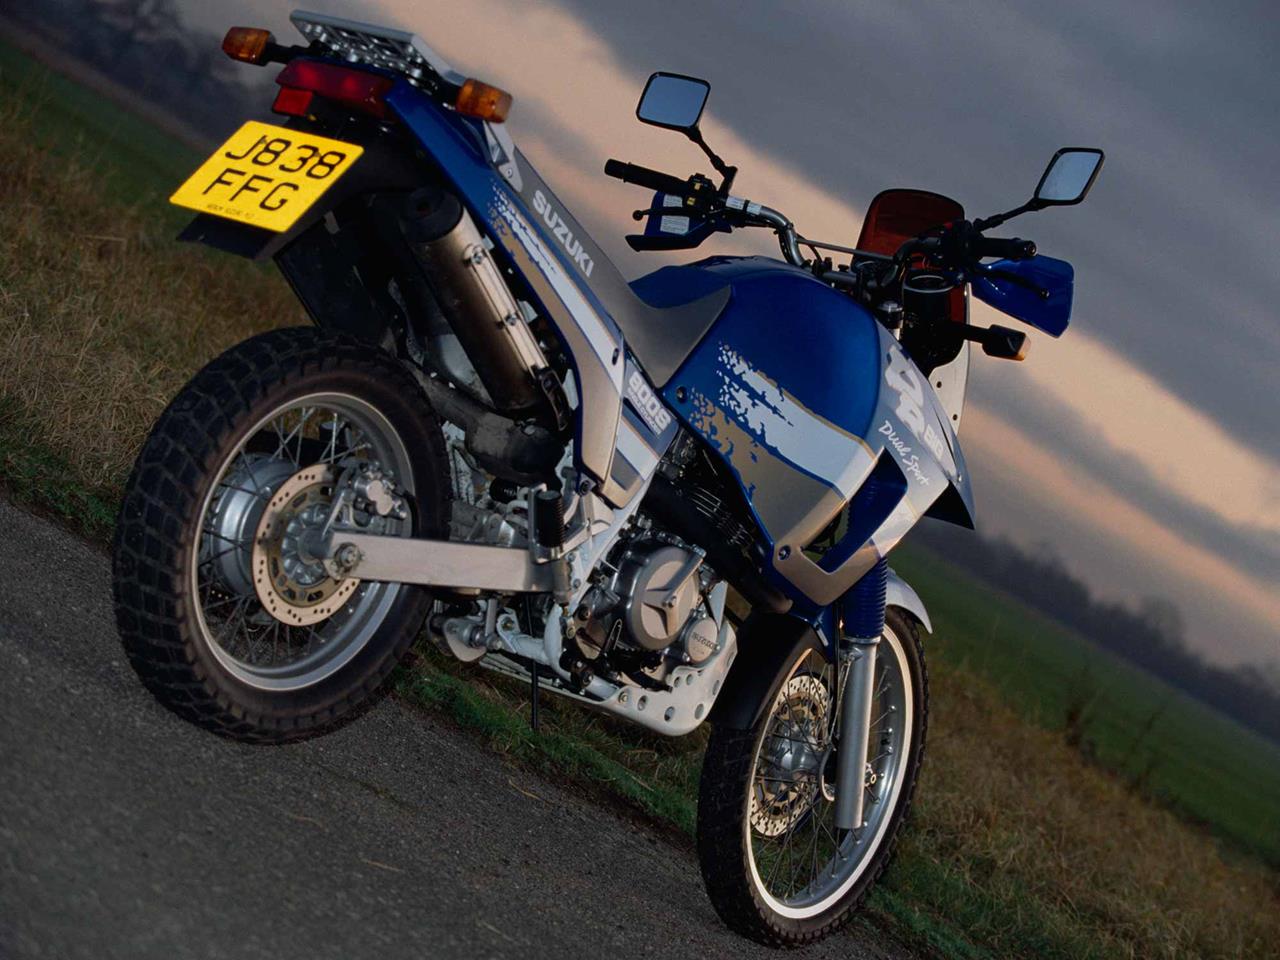 Недостатки модели Suzuki DR 800S Big 1991: